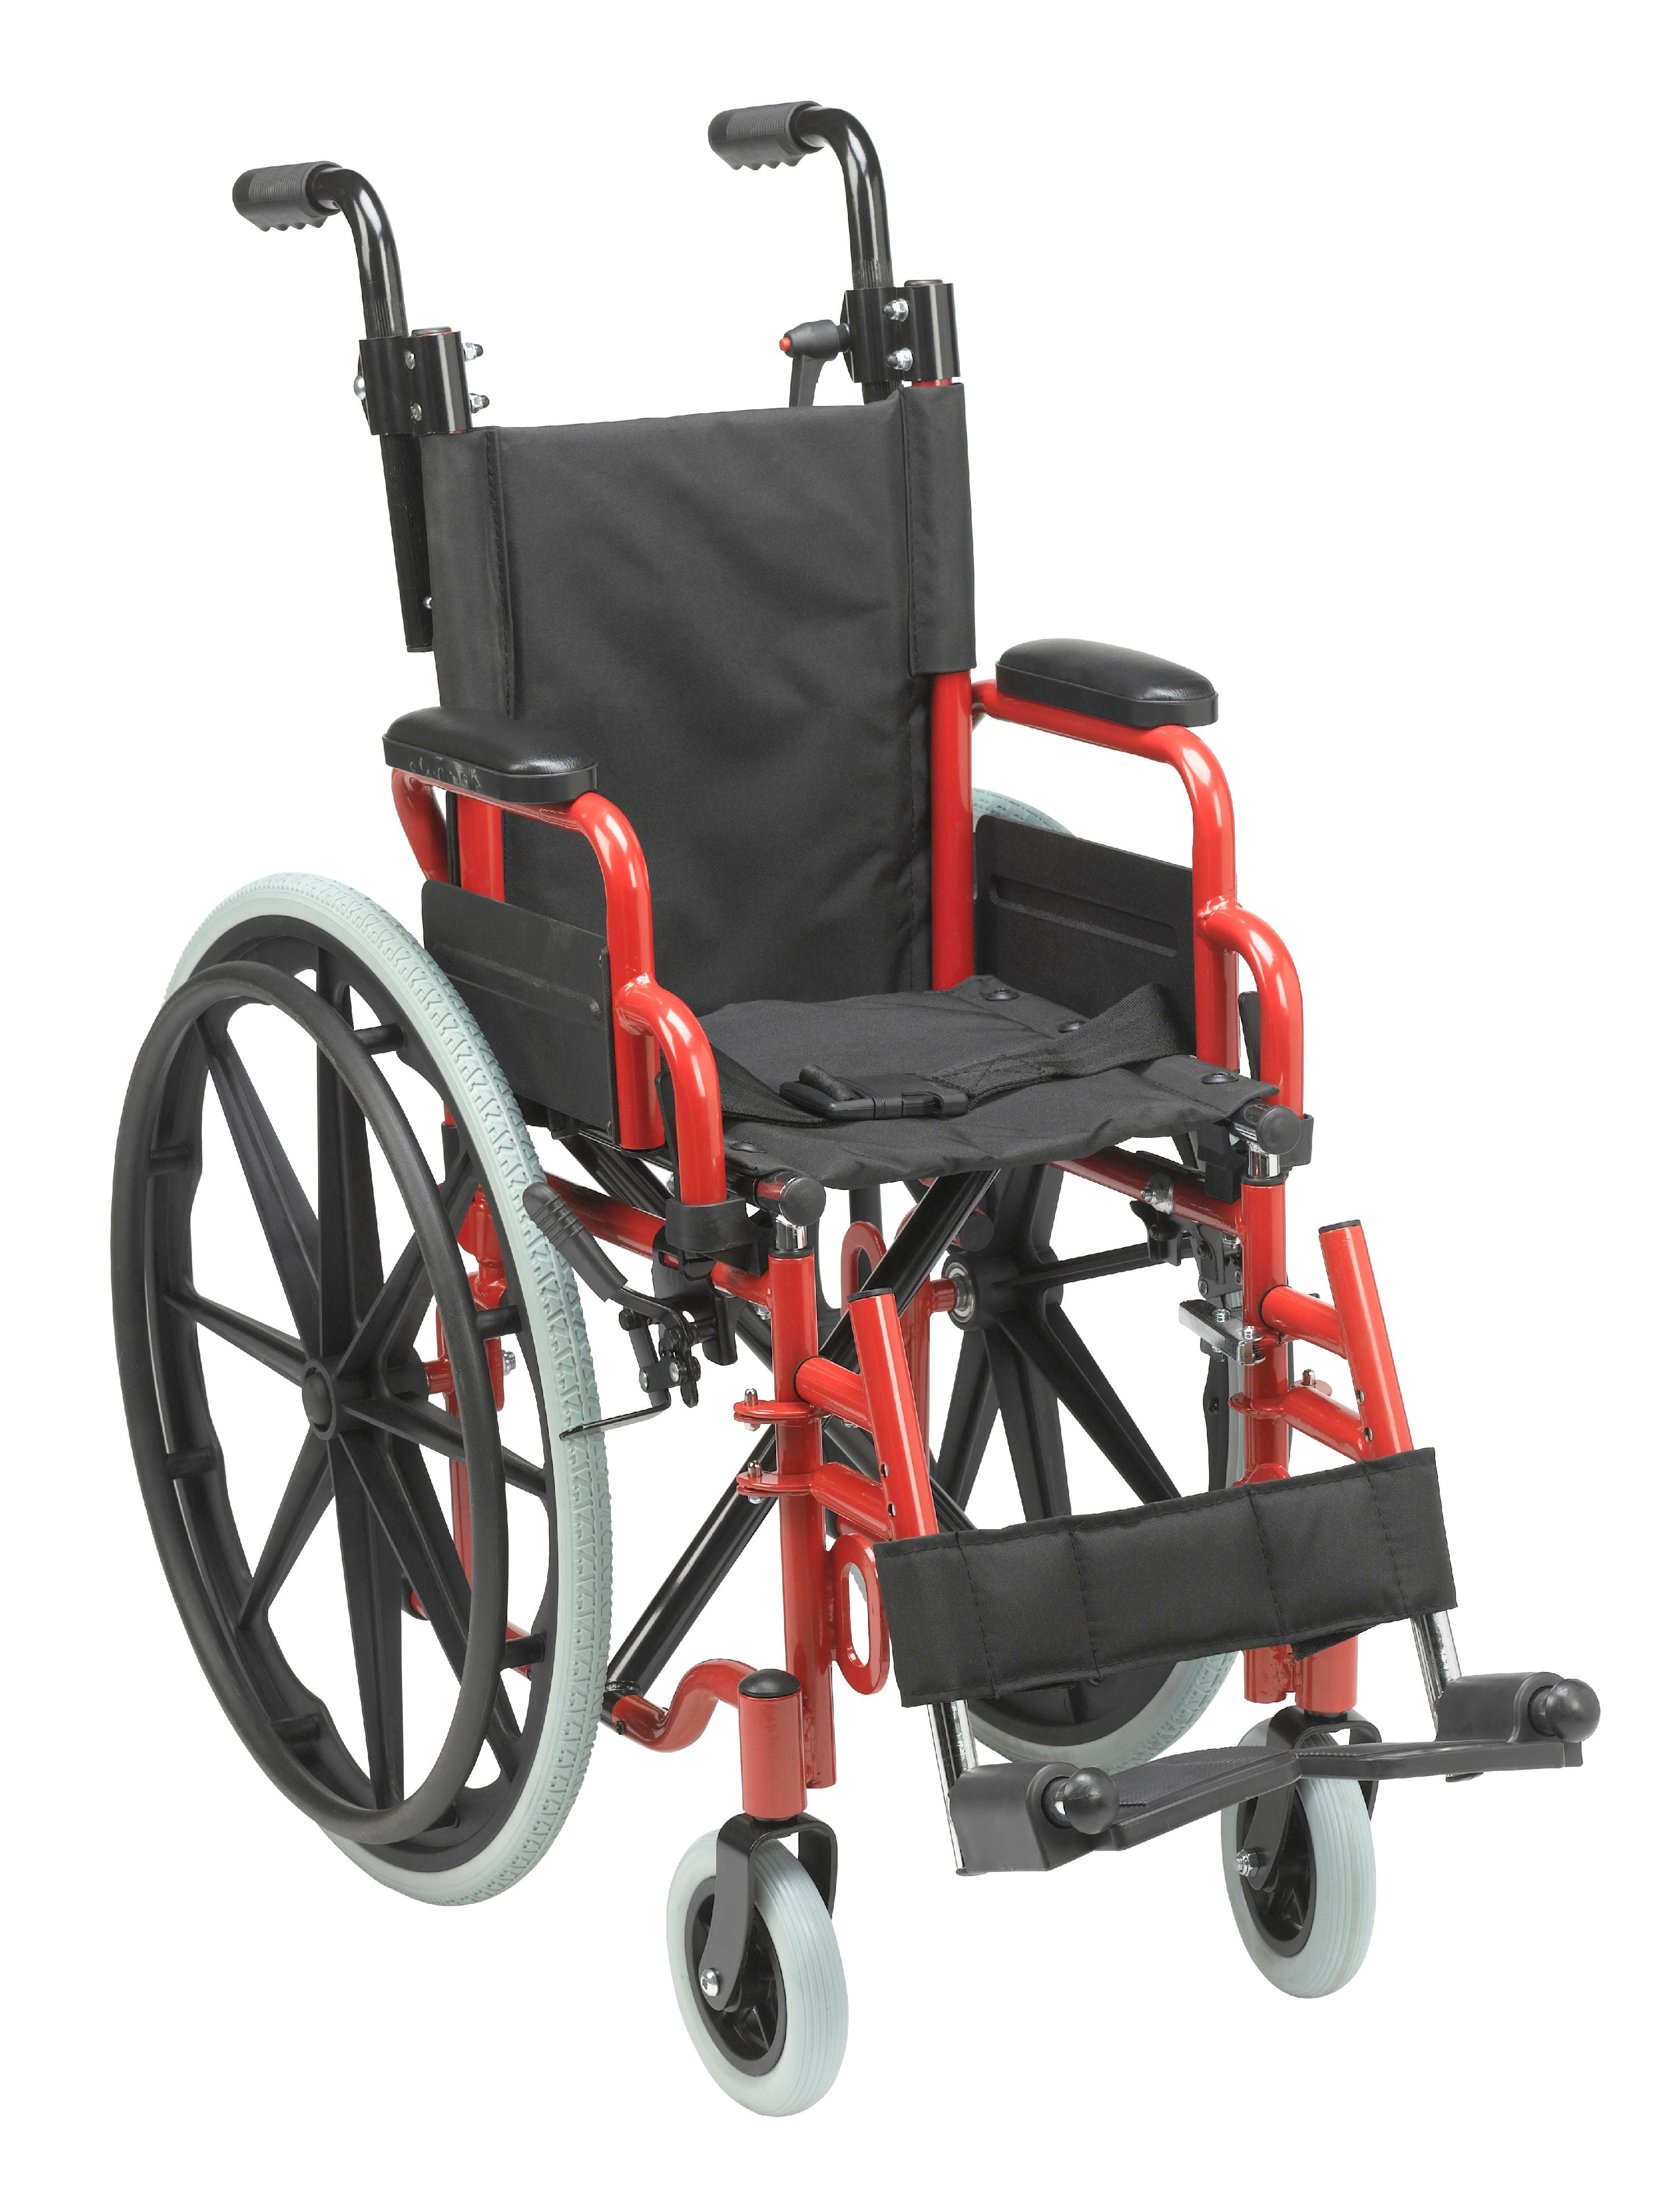 Wb1200-2gfr 12 In. Wallaby Pediatric Folding Wheelchair, Fire Truck Red